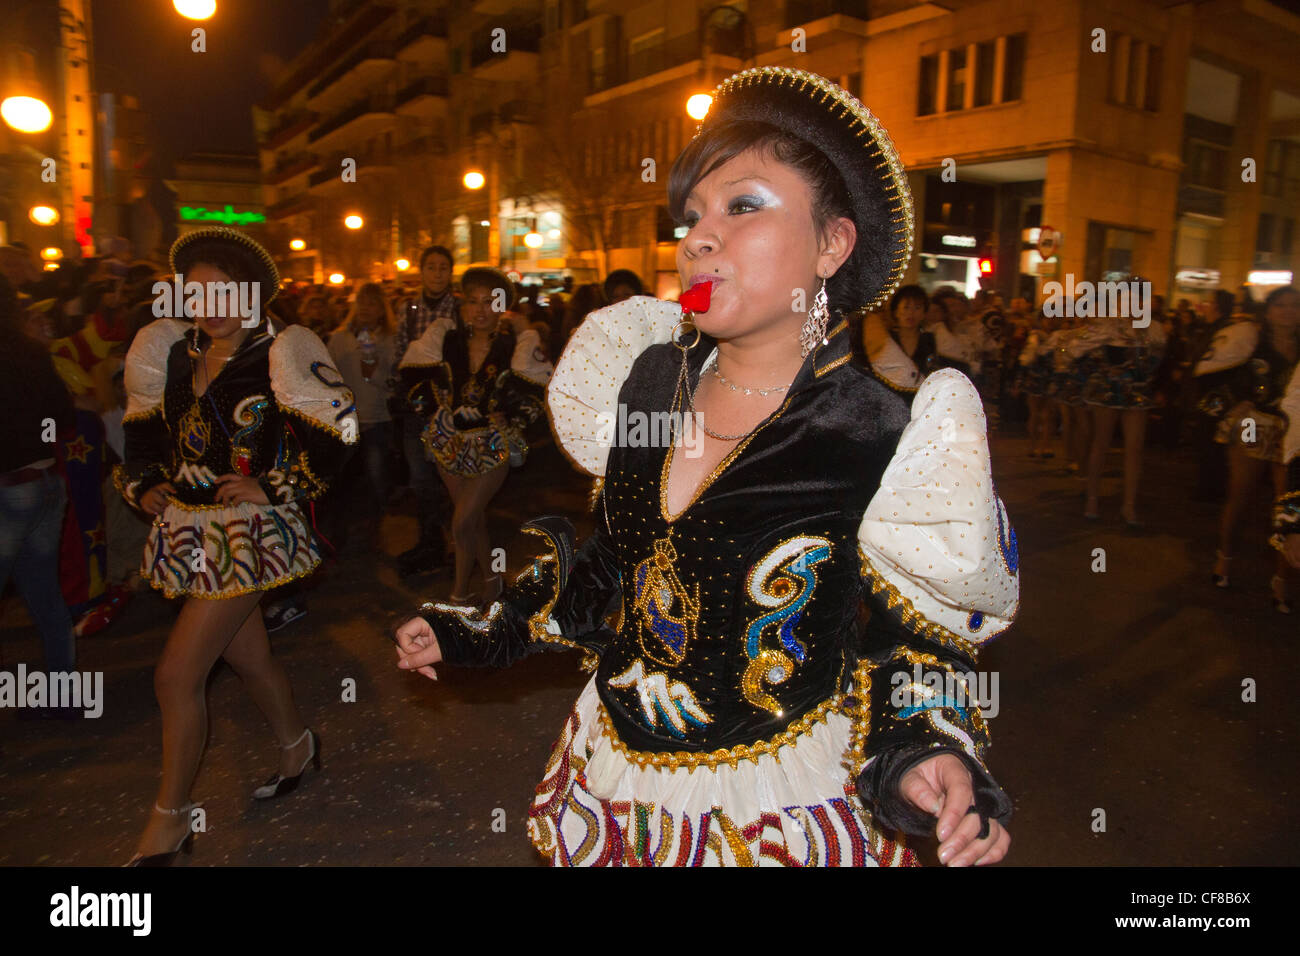 Bolivianischen kostüm Parade an Karneval Fiesta in Palma de Mallorca  Balearen Spanien Stockfotografie - Alamy